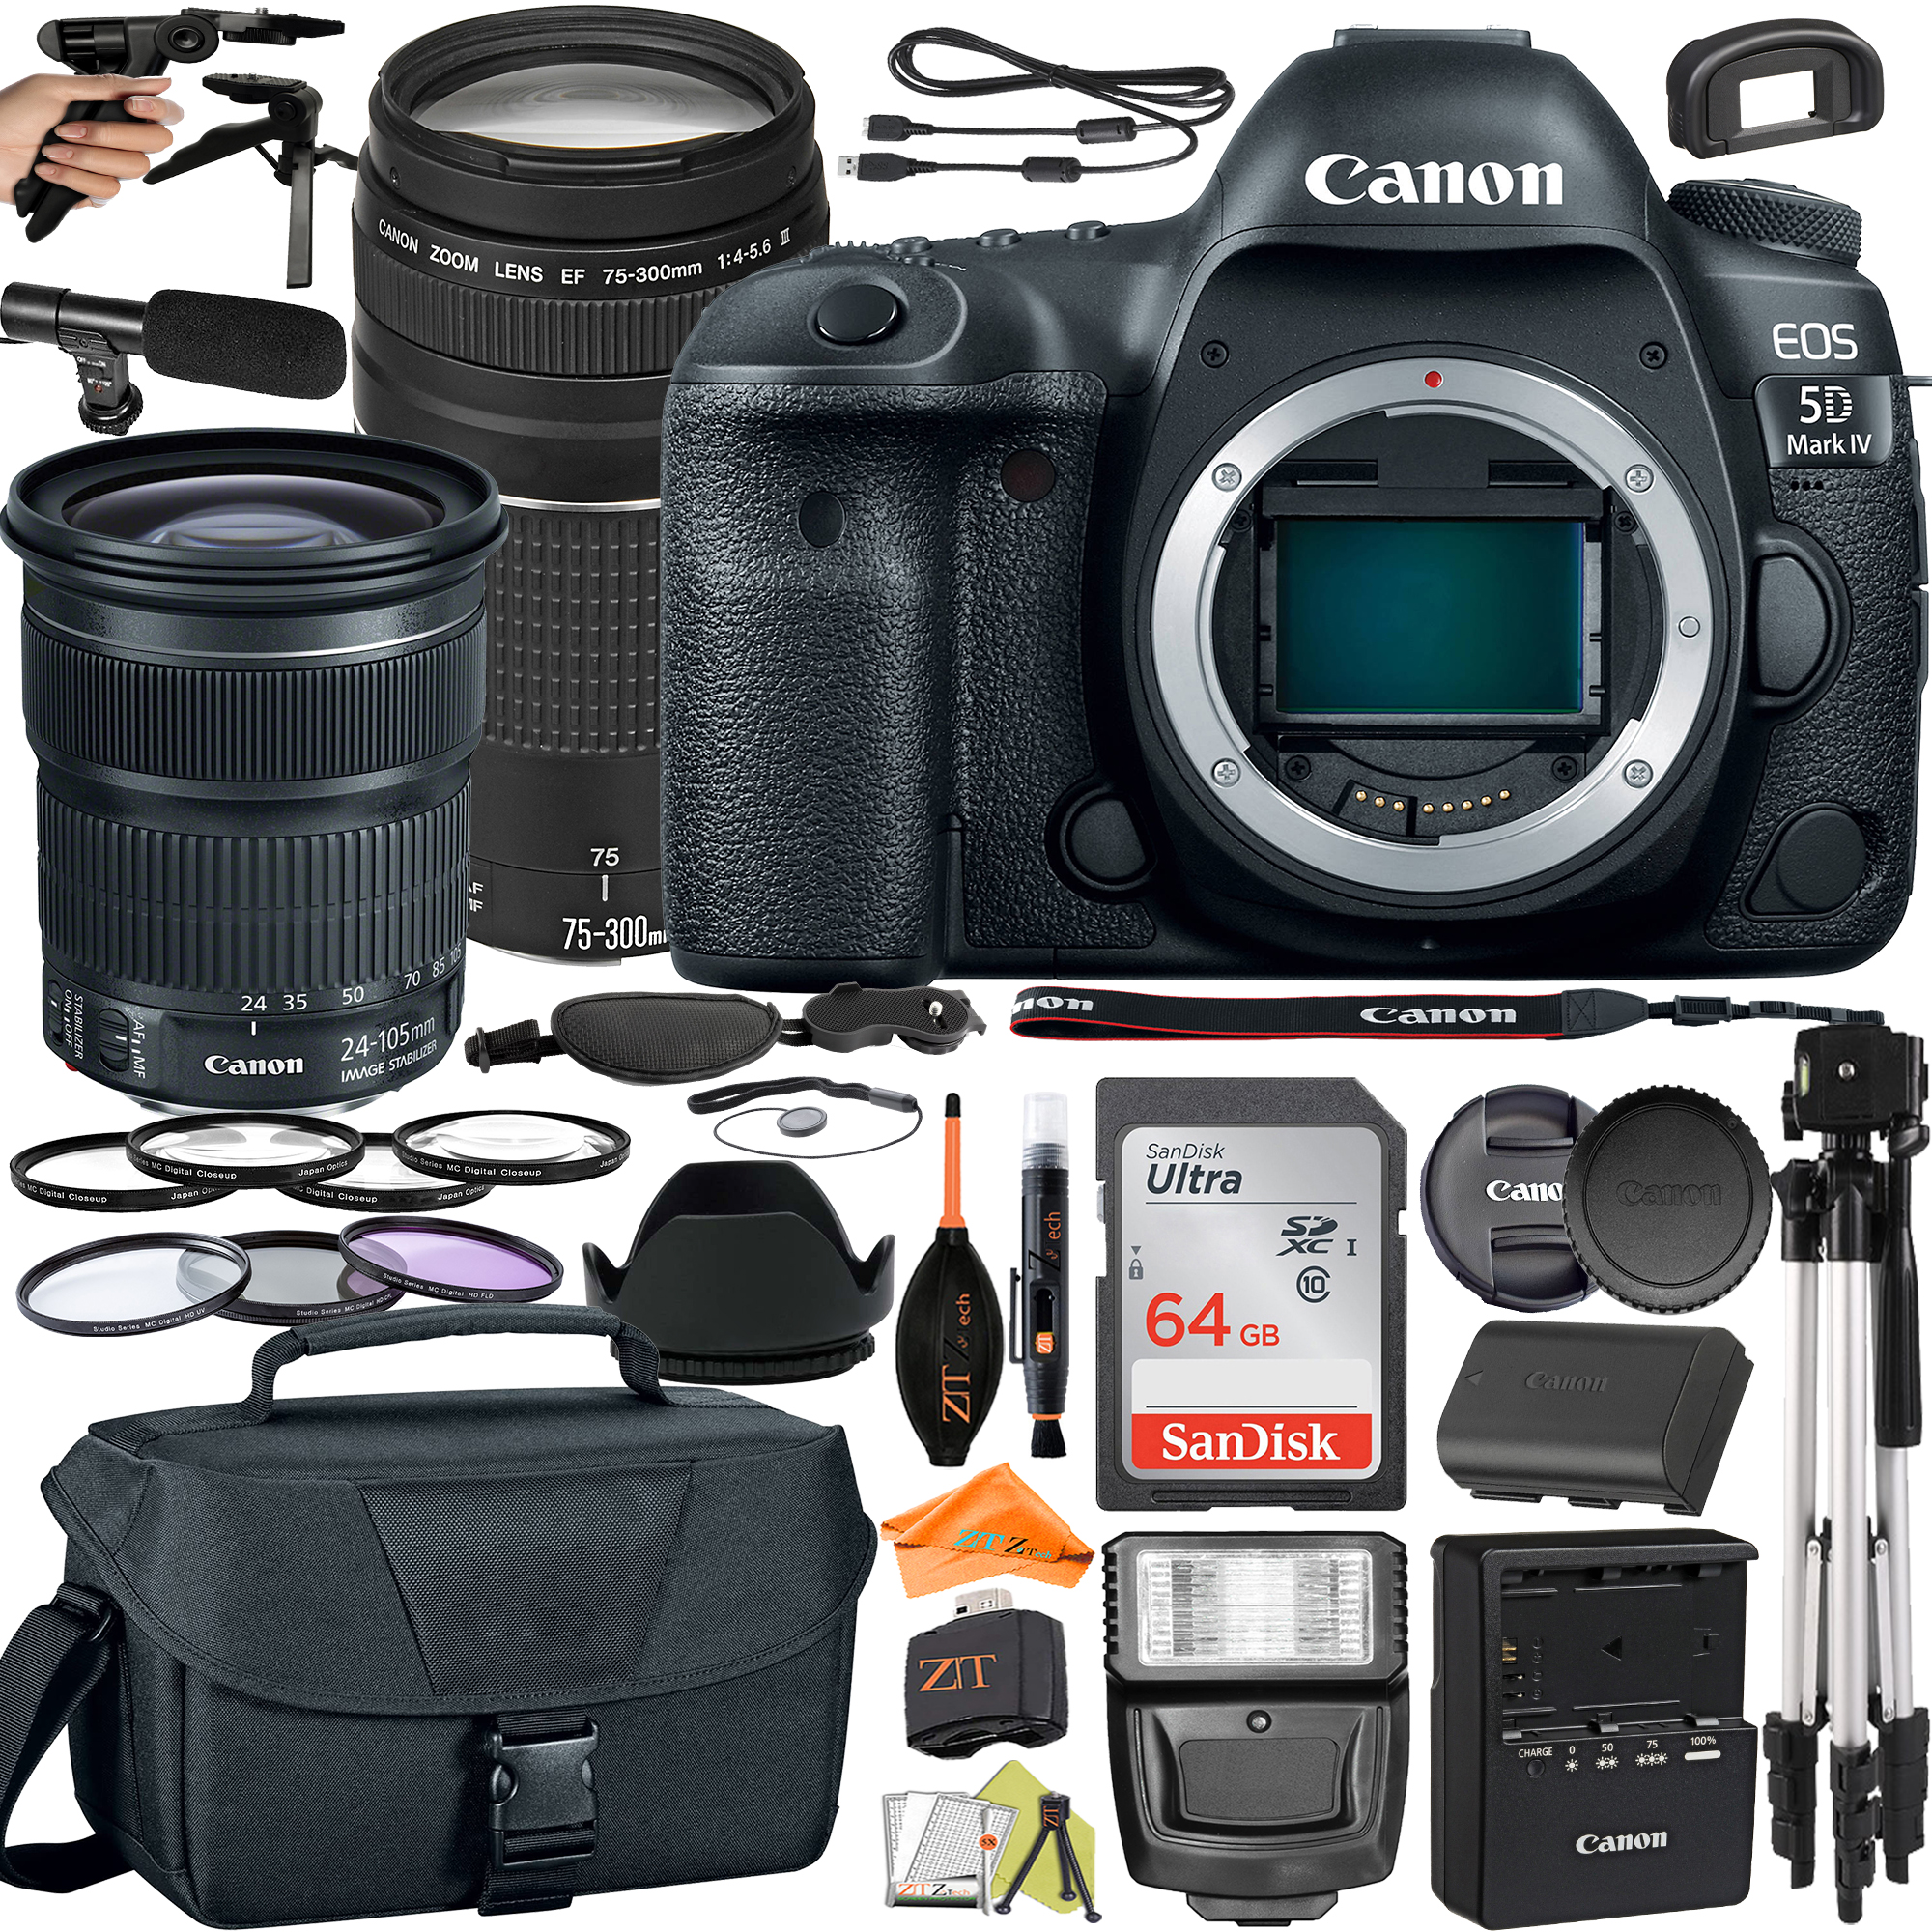 Canon EOS 5D Mark IV DSLR Camera with 24-105mm + 75-300mm Lens + SanDisk 64GB + Microphone + Flash + ZeeTech Accessory Bundle